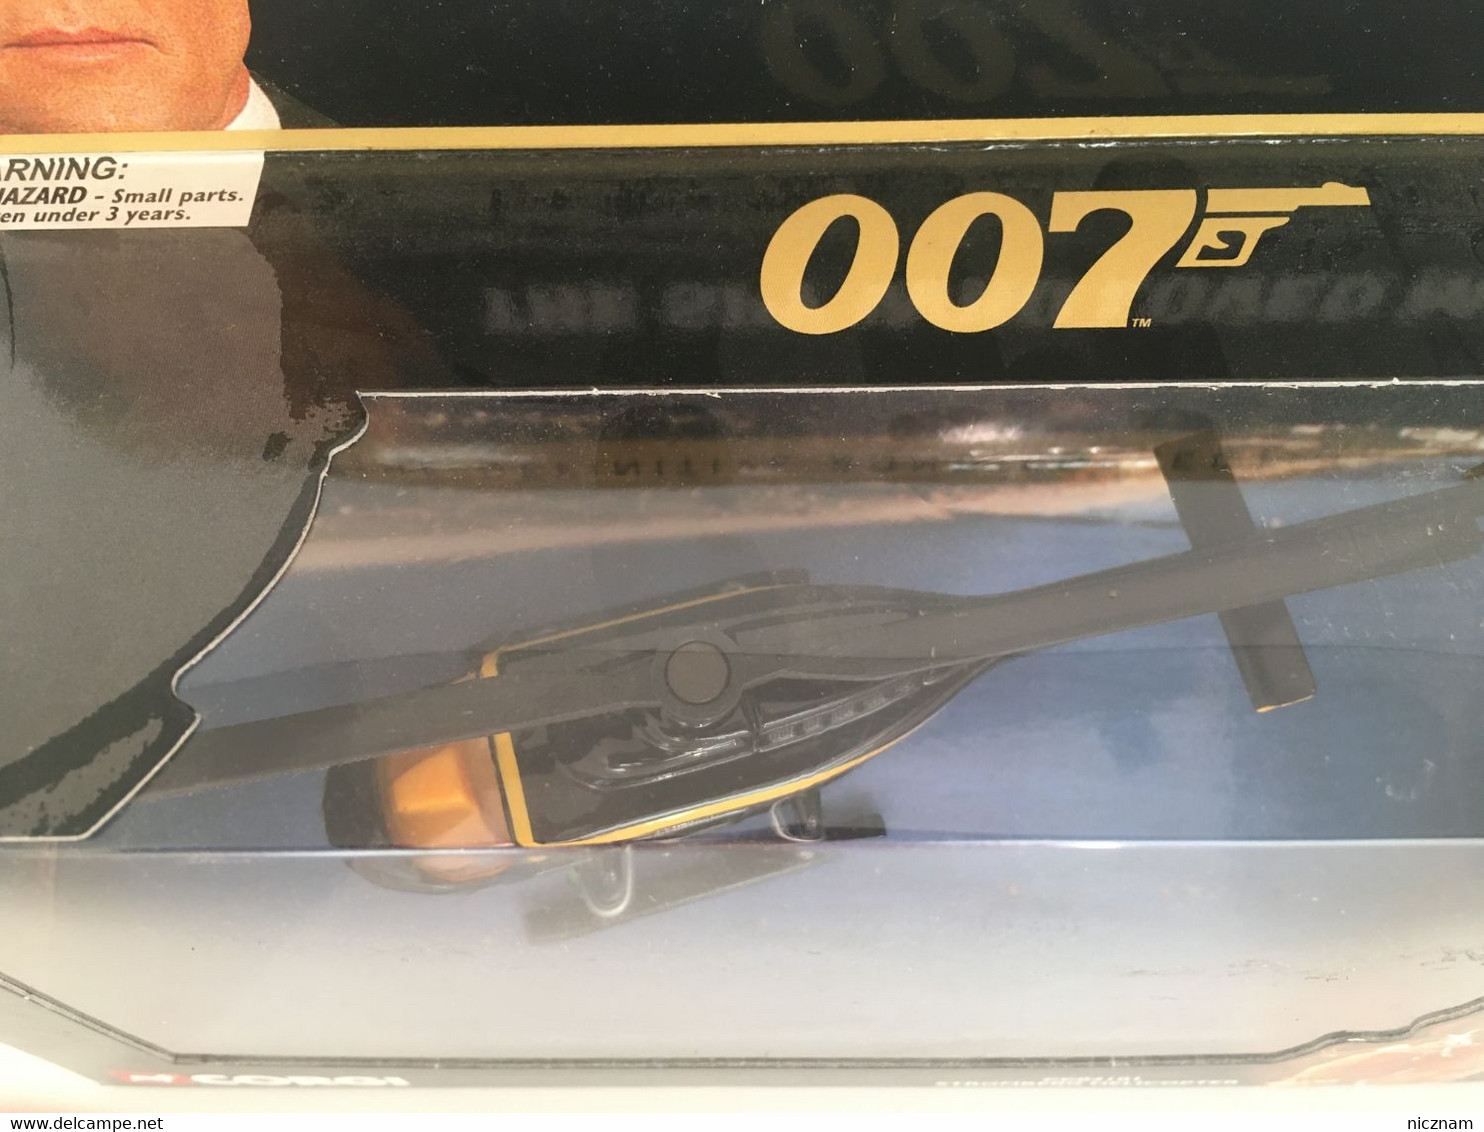 CORGI The Definitive James Bond Collection - Stromberg Helicopter - Collectors Et Insolites - Toutes Marques